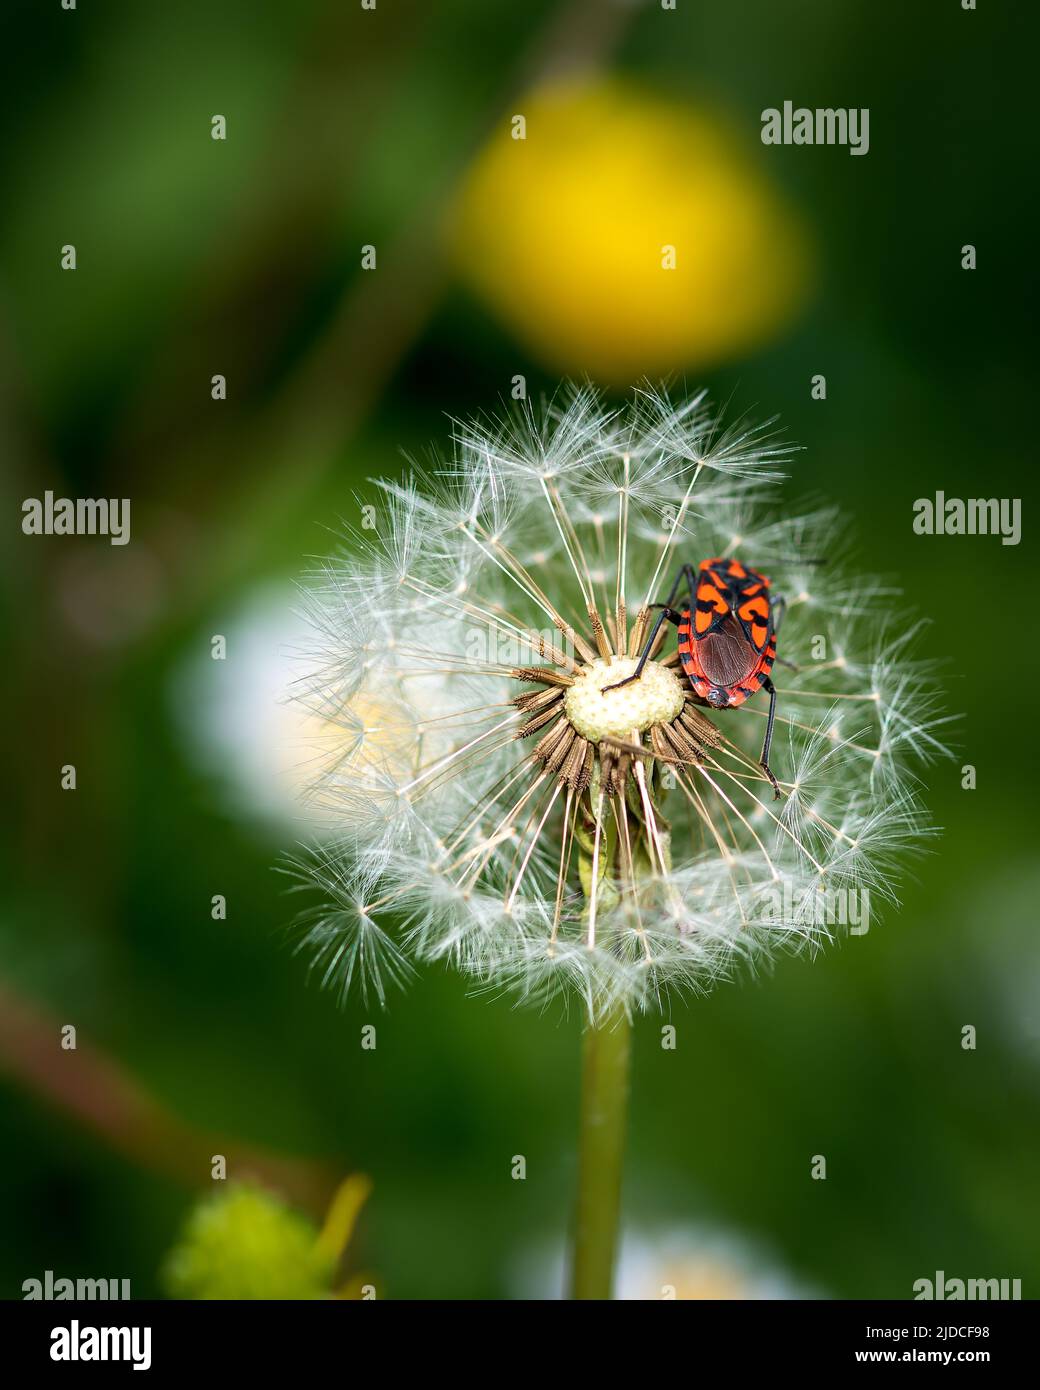 European firebug landed on dandelion, close-up photo of firebug insect Stock Photo